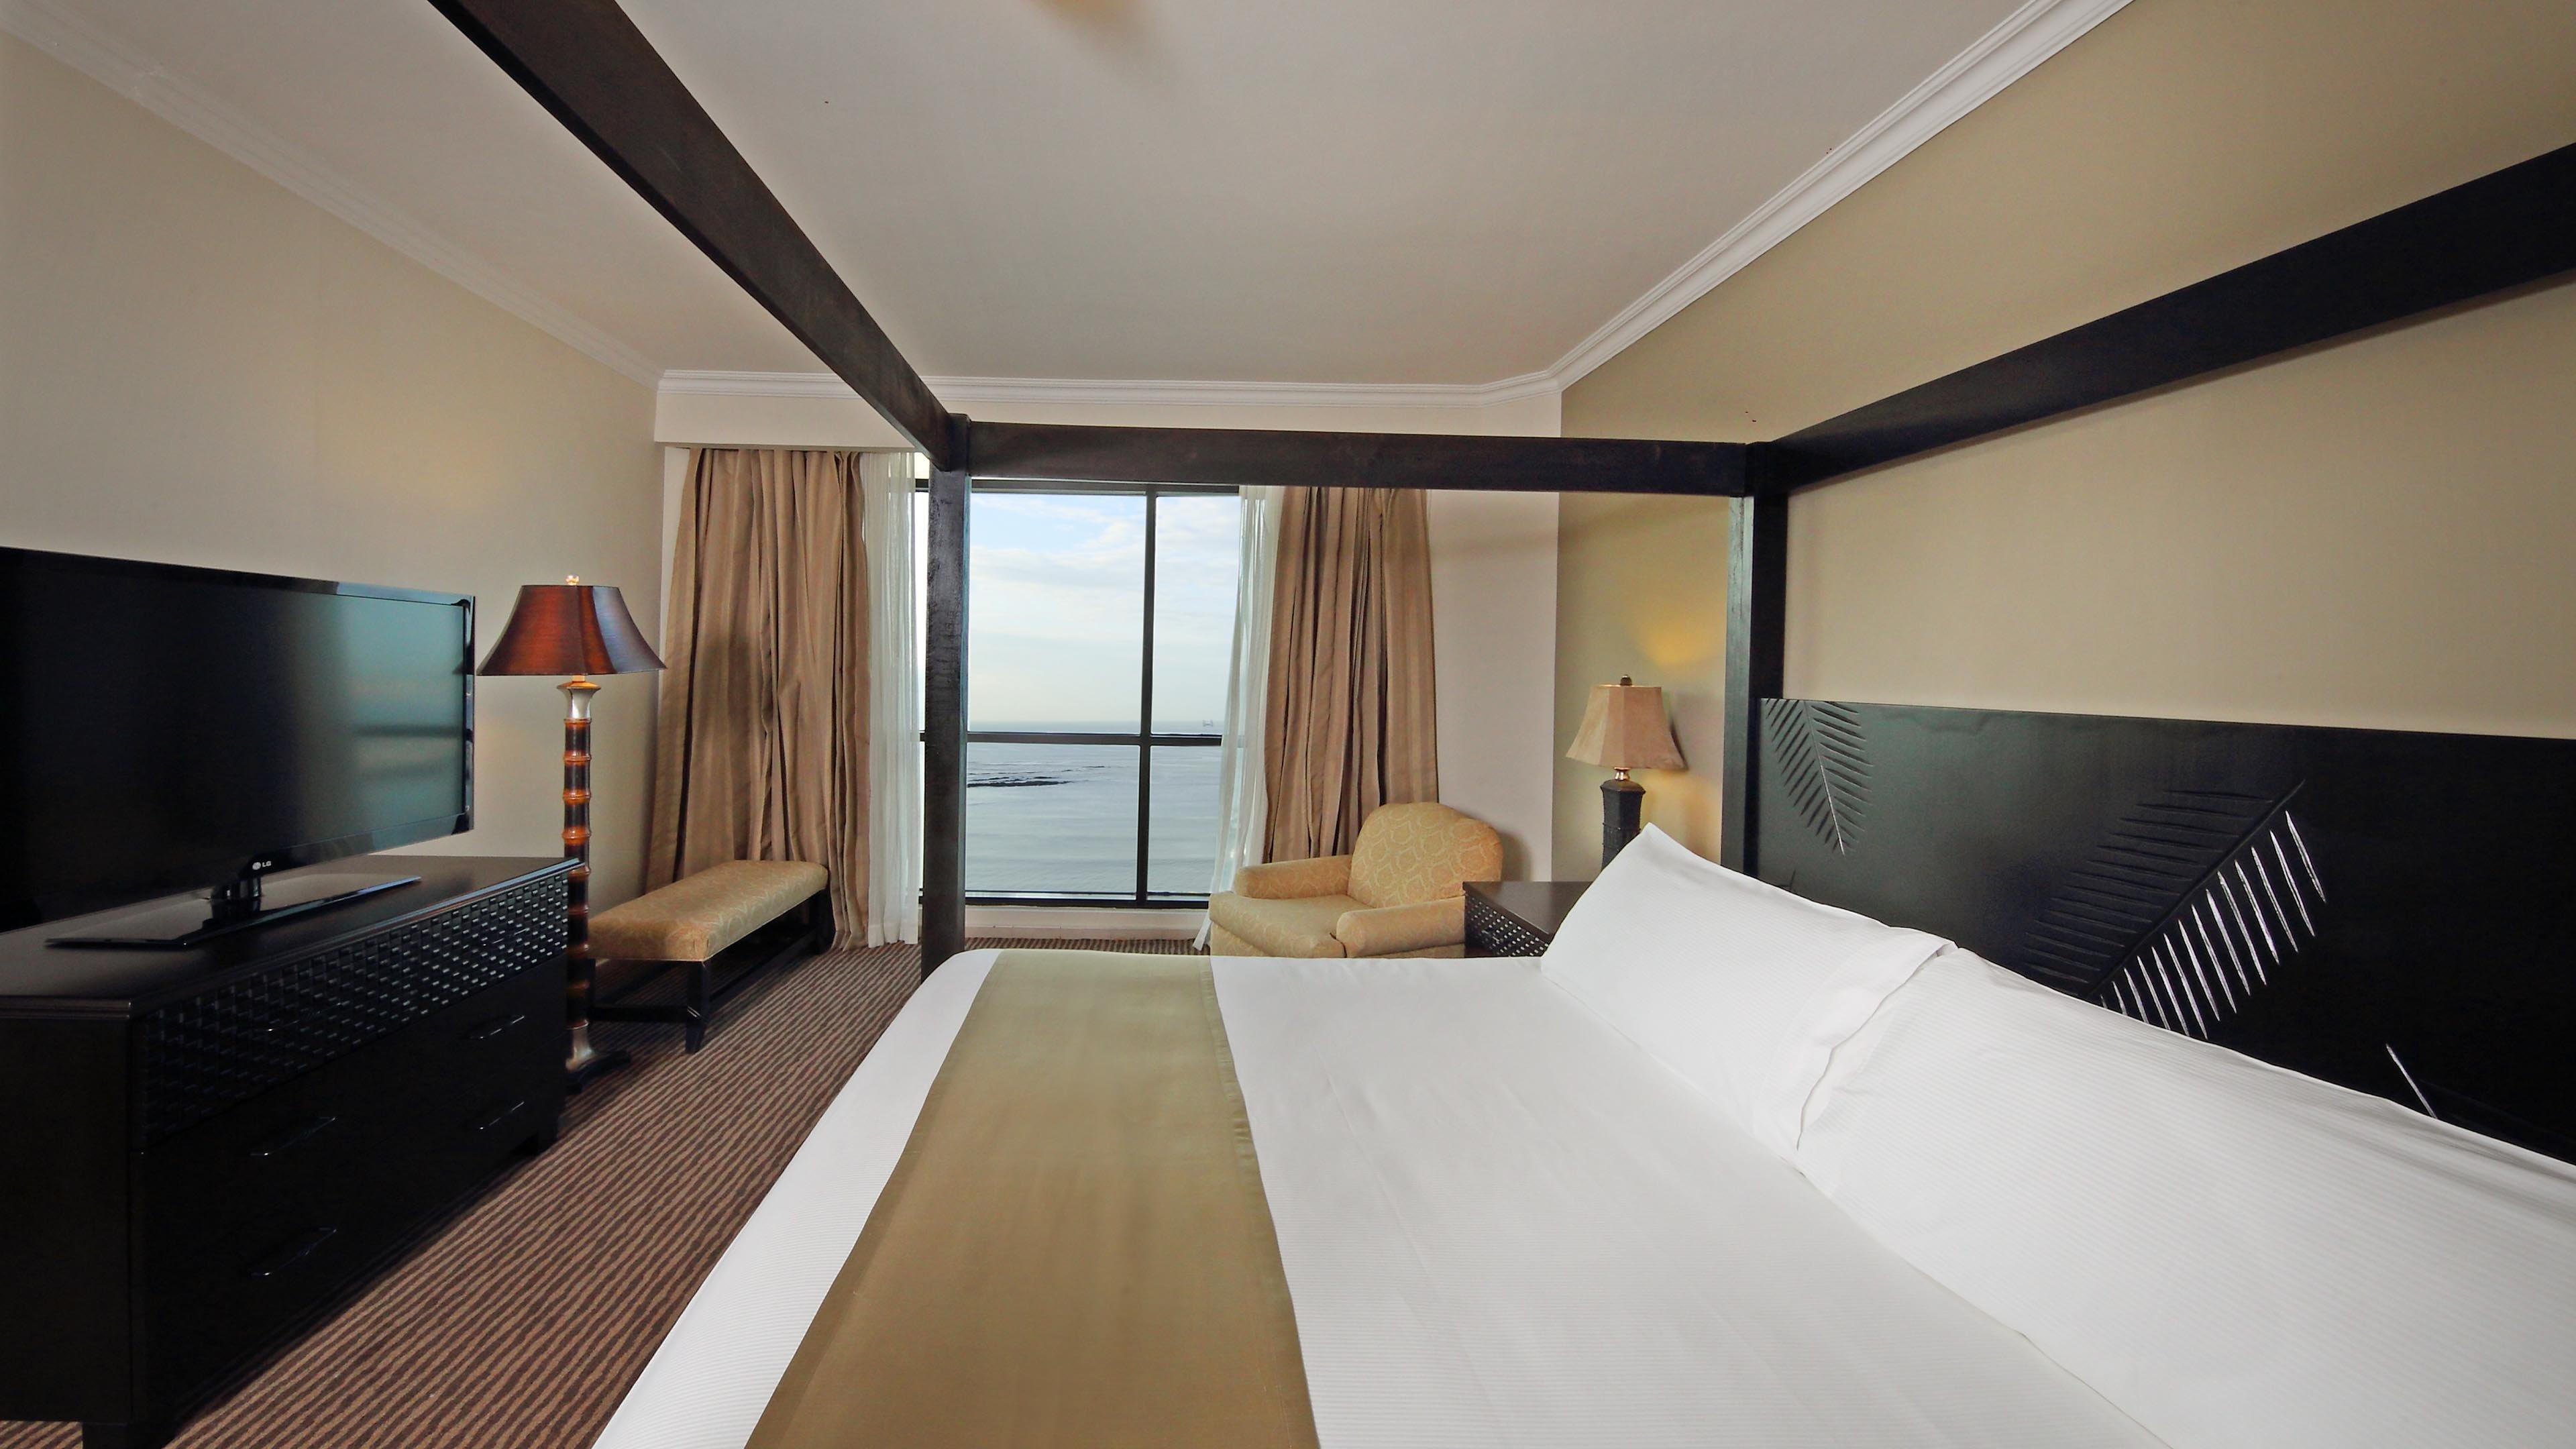 Bedroom of Suite at Hotel in Panama. Intercontinental Miramar